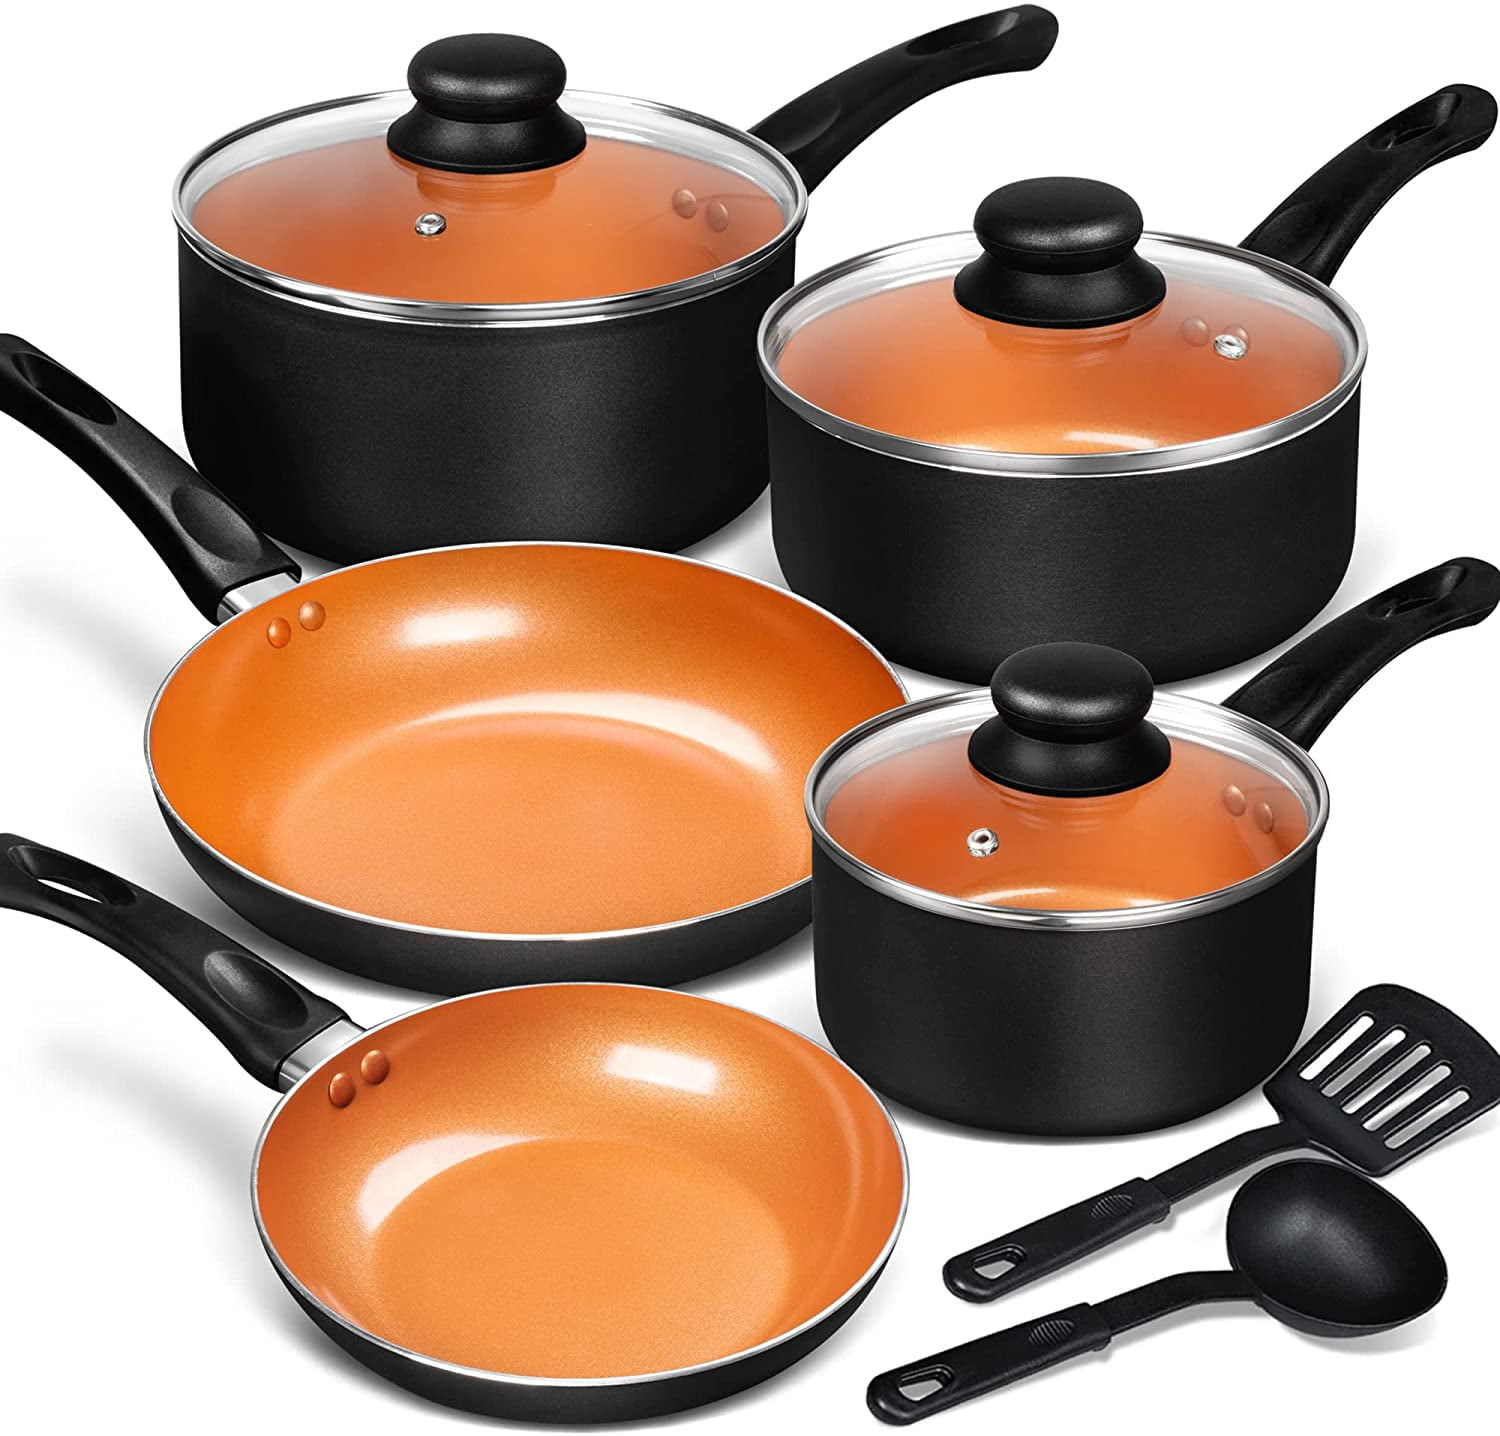 MICHELANGELO Copper Pots and Pans Set Nonstick, Basic Copper Cookware Set  with Bakelite Handle, Kitchen Cookware Set with Ceramic Nonstick Coating,  ...